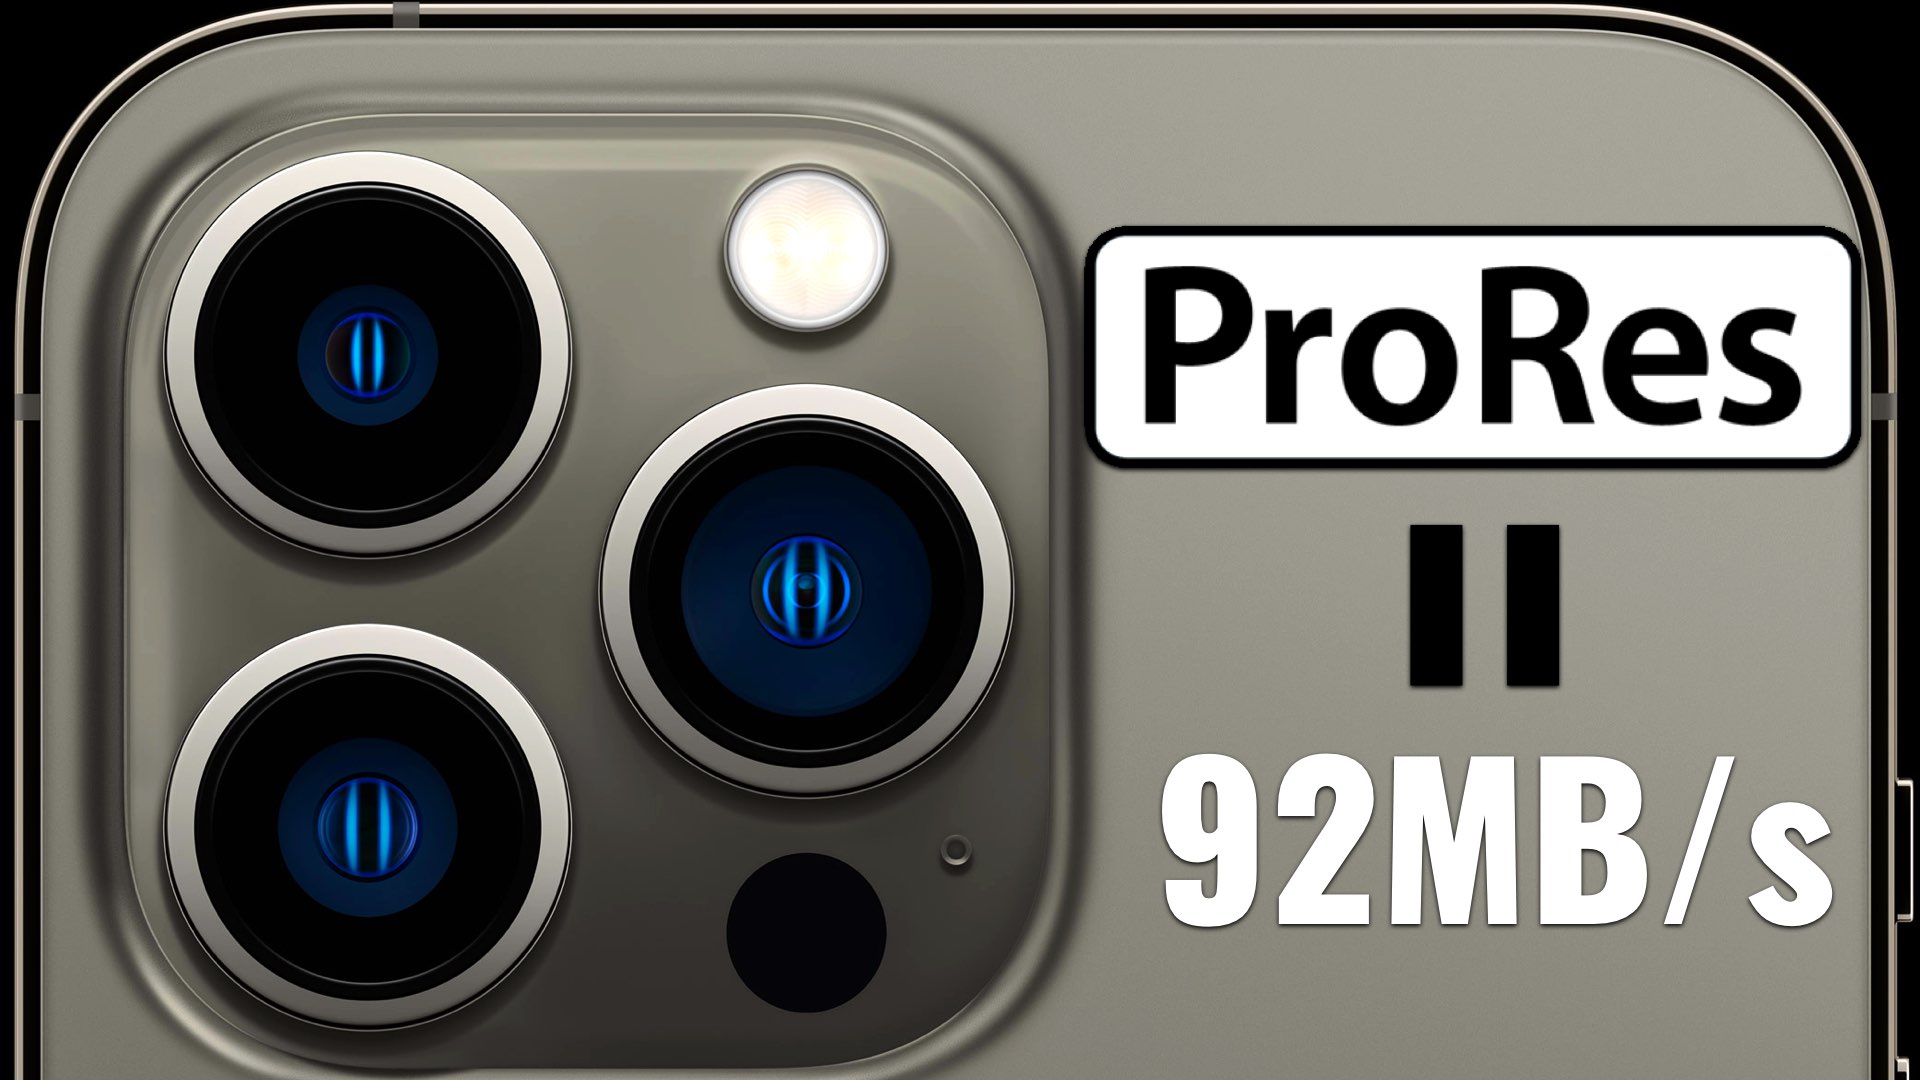 iPhone13 Pro’s ProRes Maximum Bitrate is 92MB/sec (5.5GB/minute)